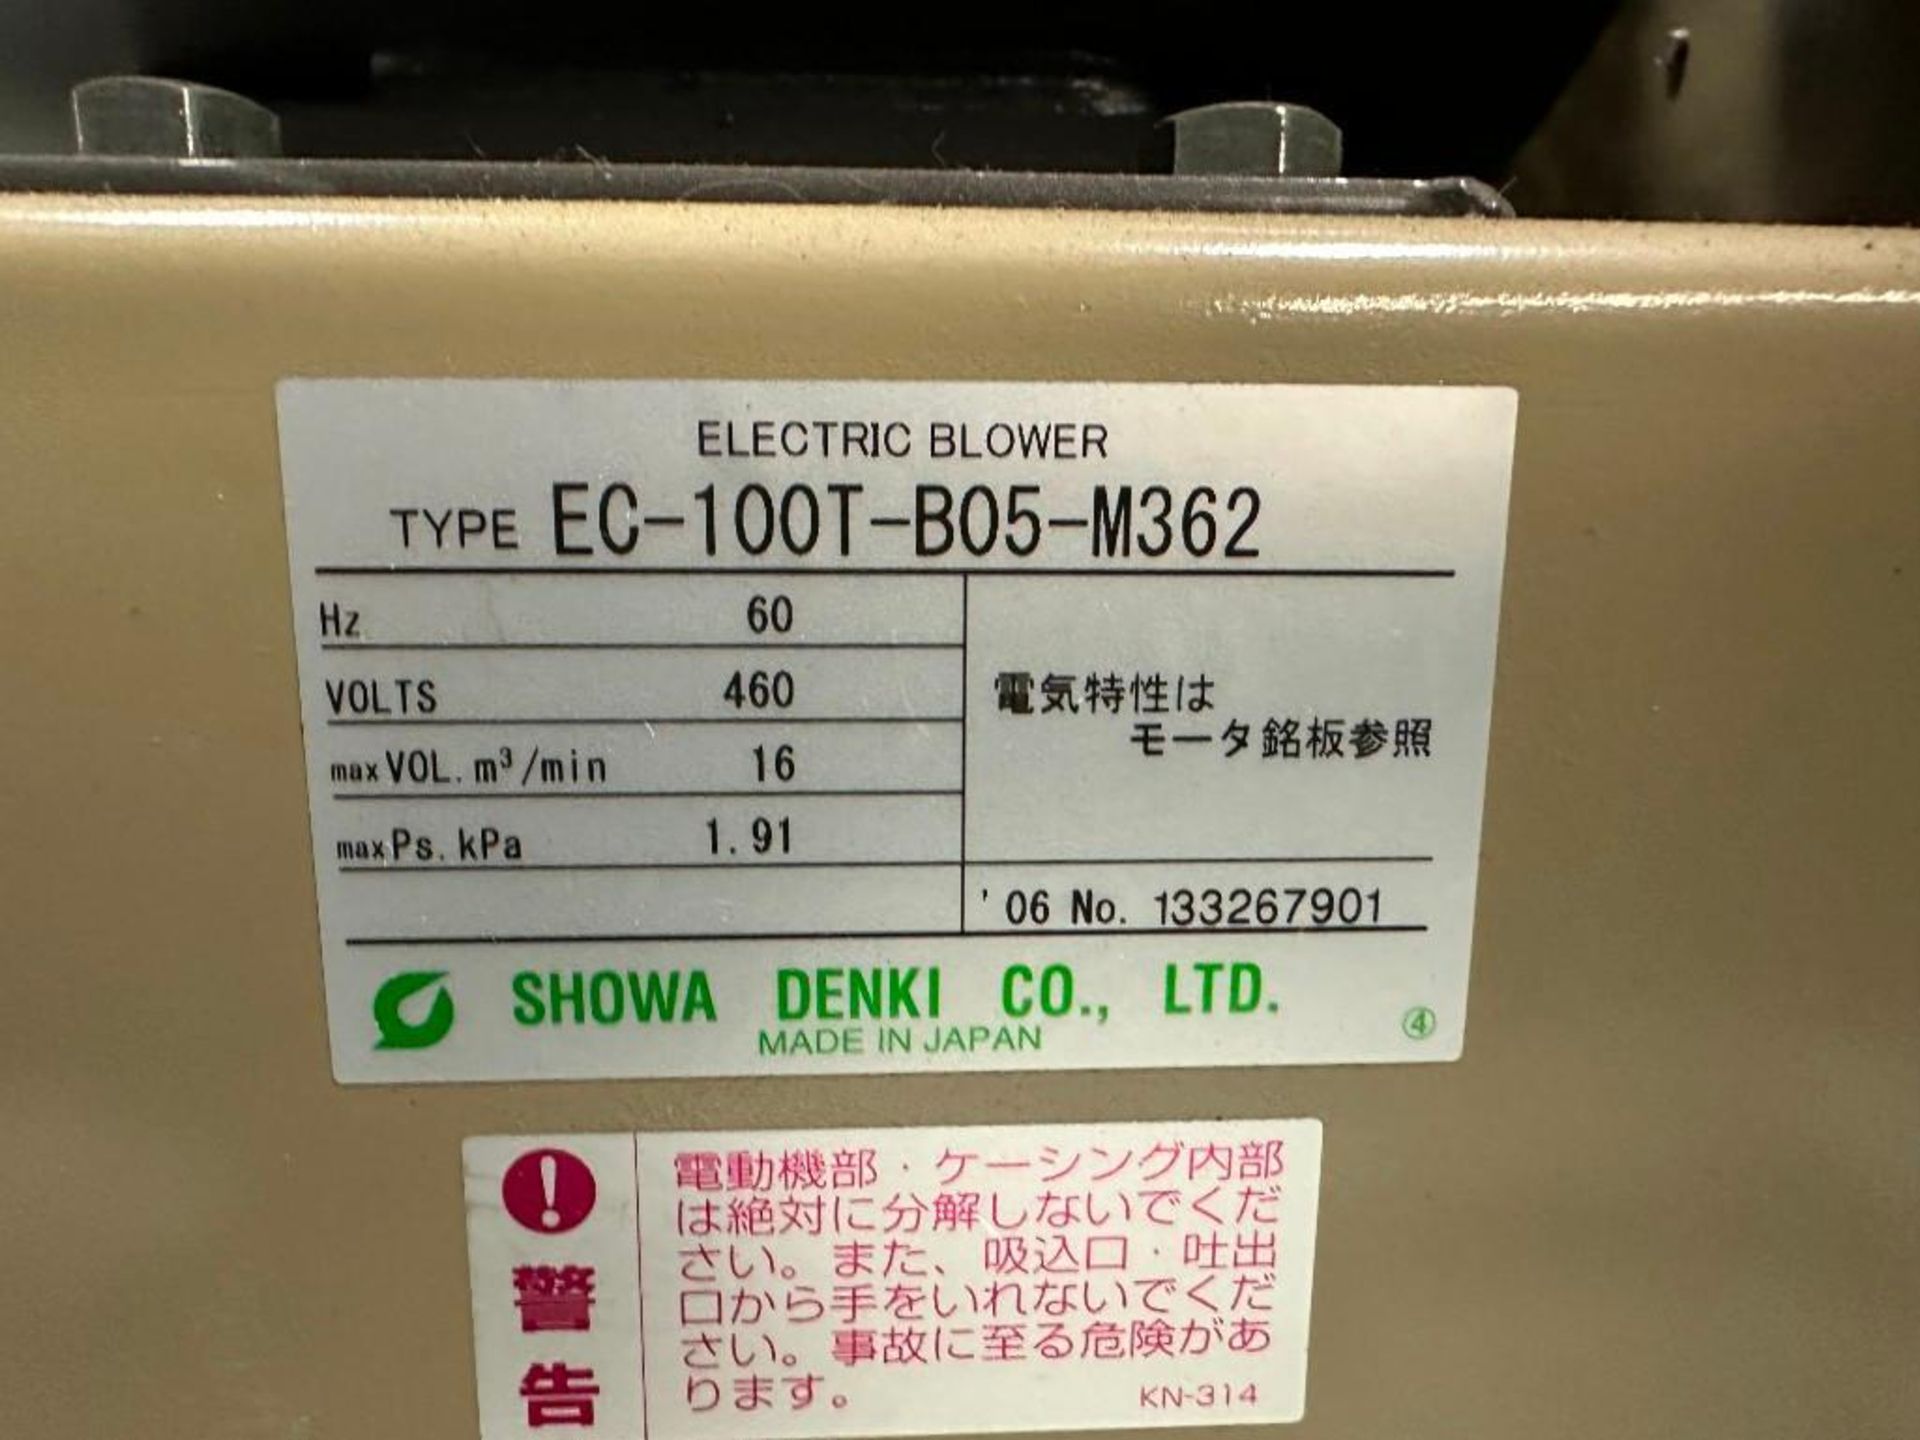 Showa Denki #EC-100T-B05-M362 Electric Blower w/#BV801743 Motor - Image 7 of 7